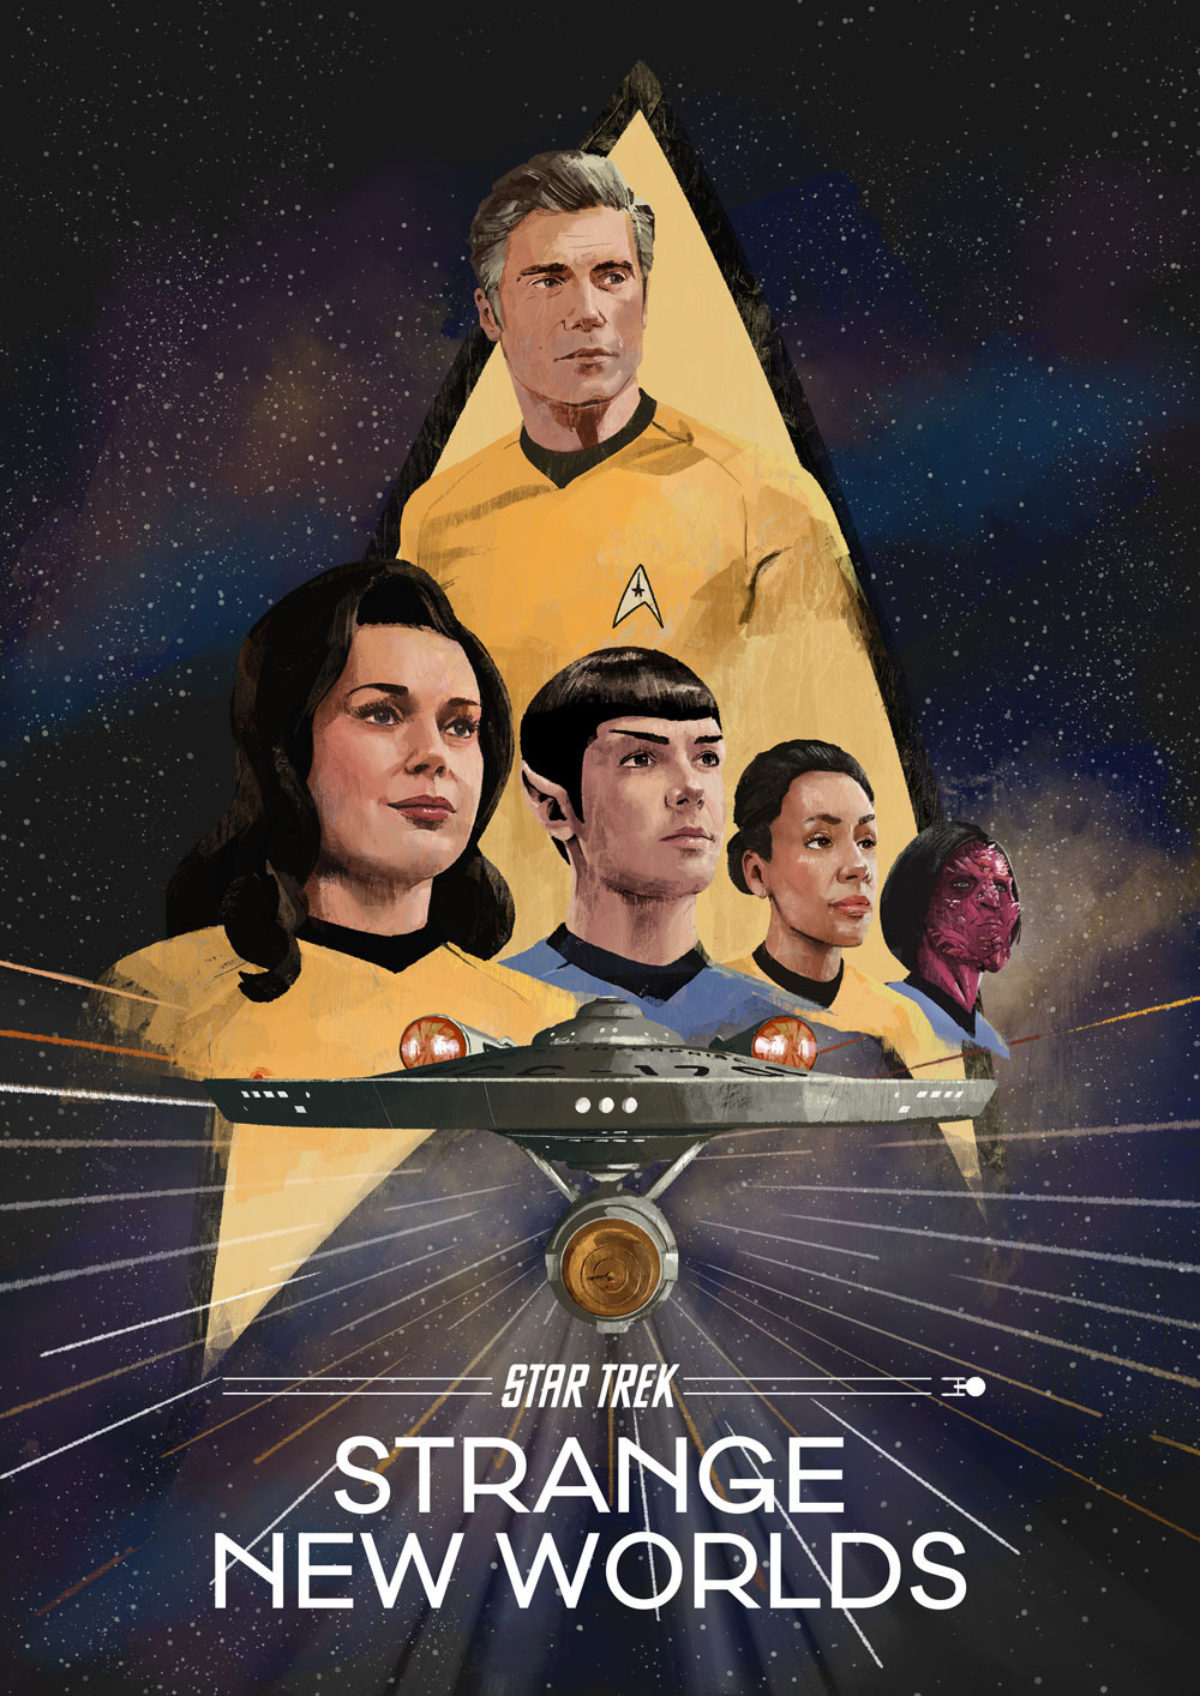 Star Trek: Strange New Worlds - Release Date, Cast, Plot, and Many more! -  DroidJournal